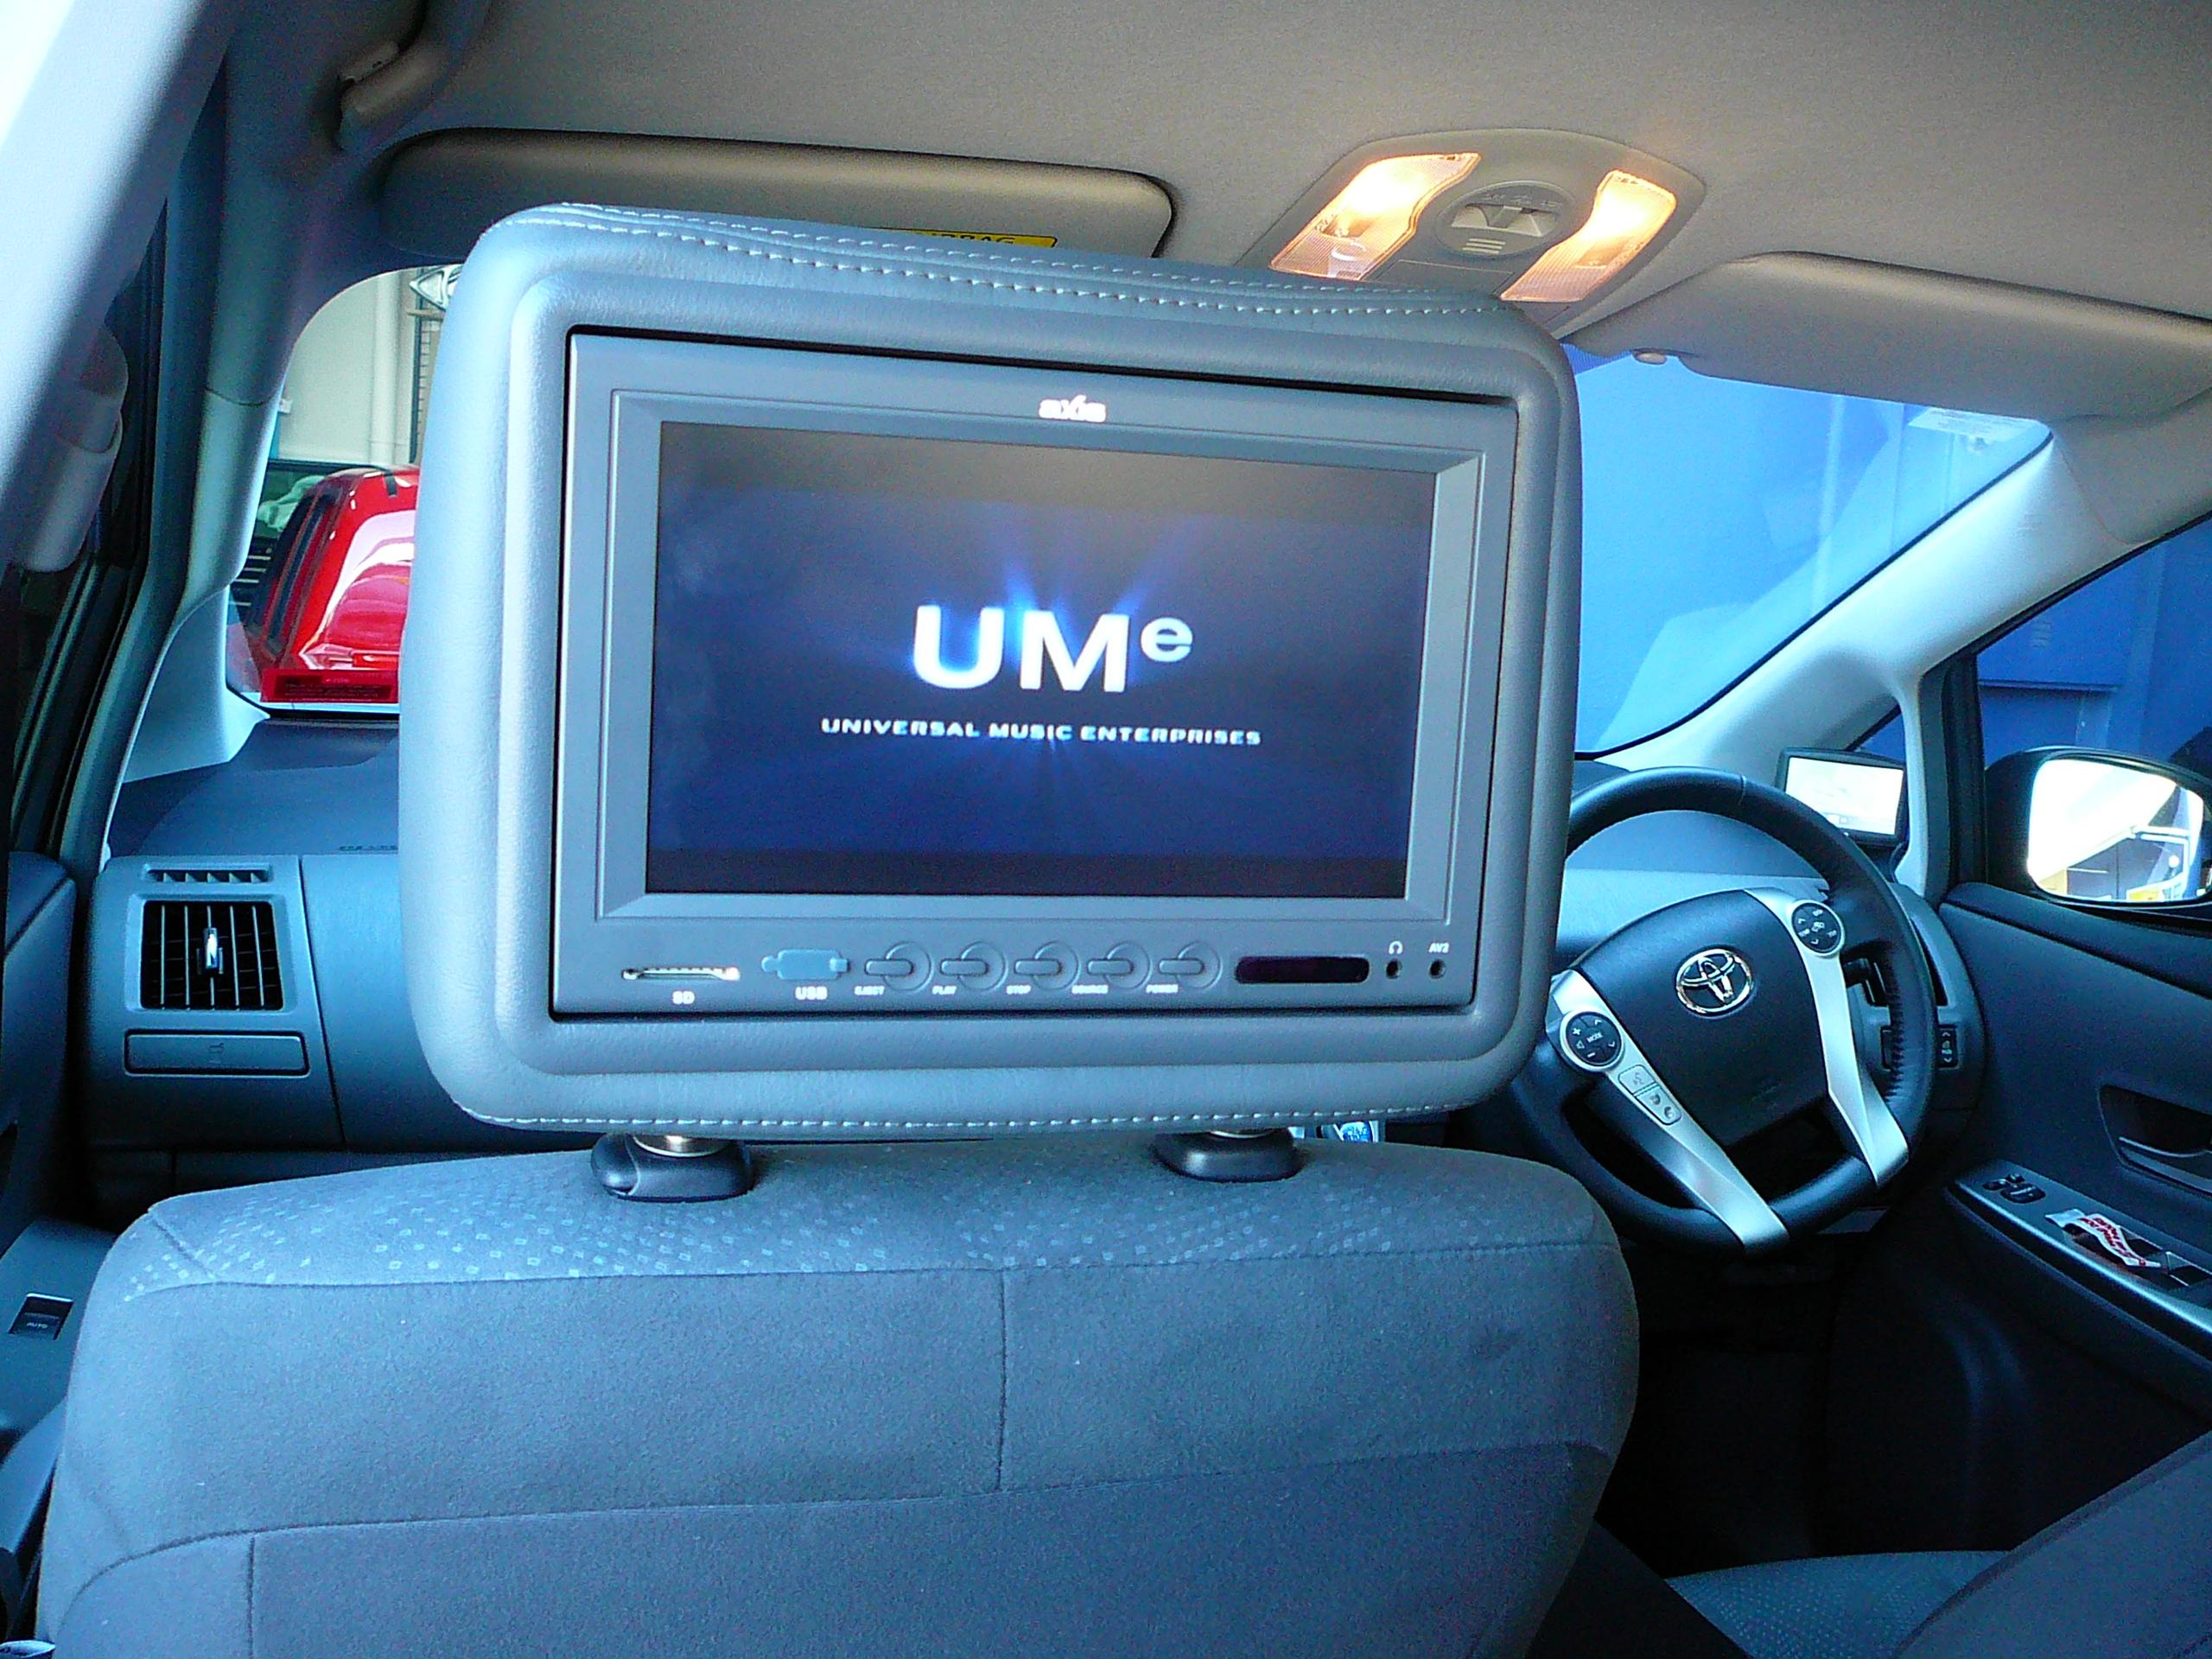 Toyota Prius 2013, Rear Seat 8 inch DVD Screens